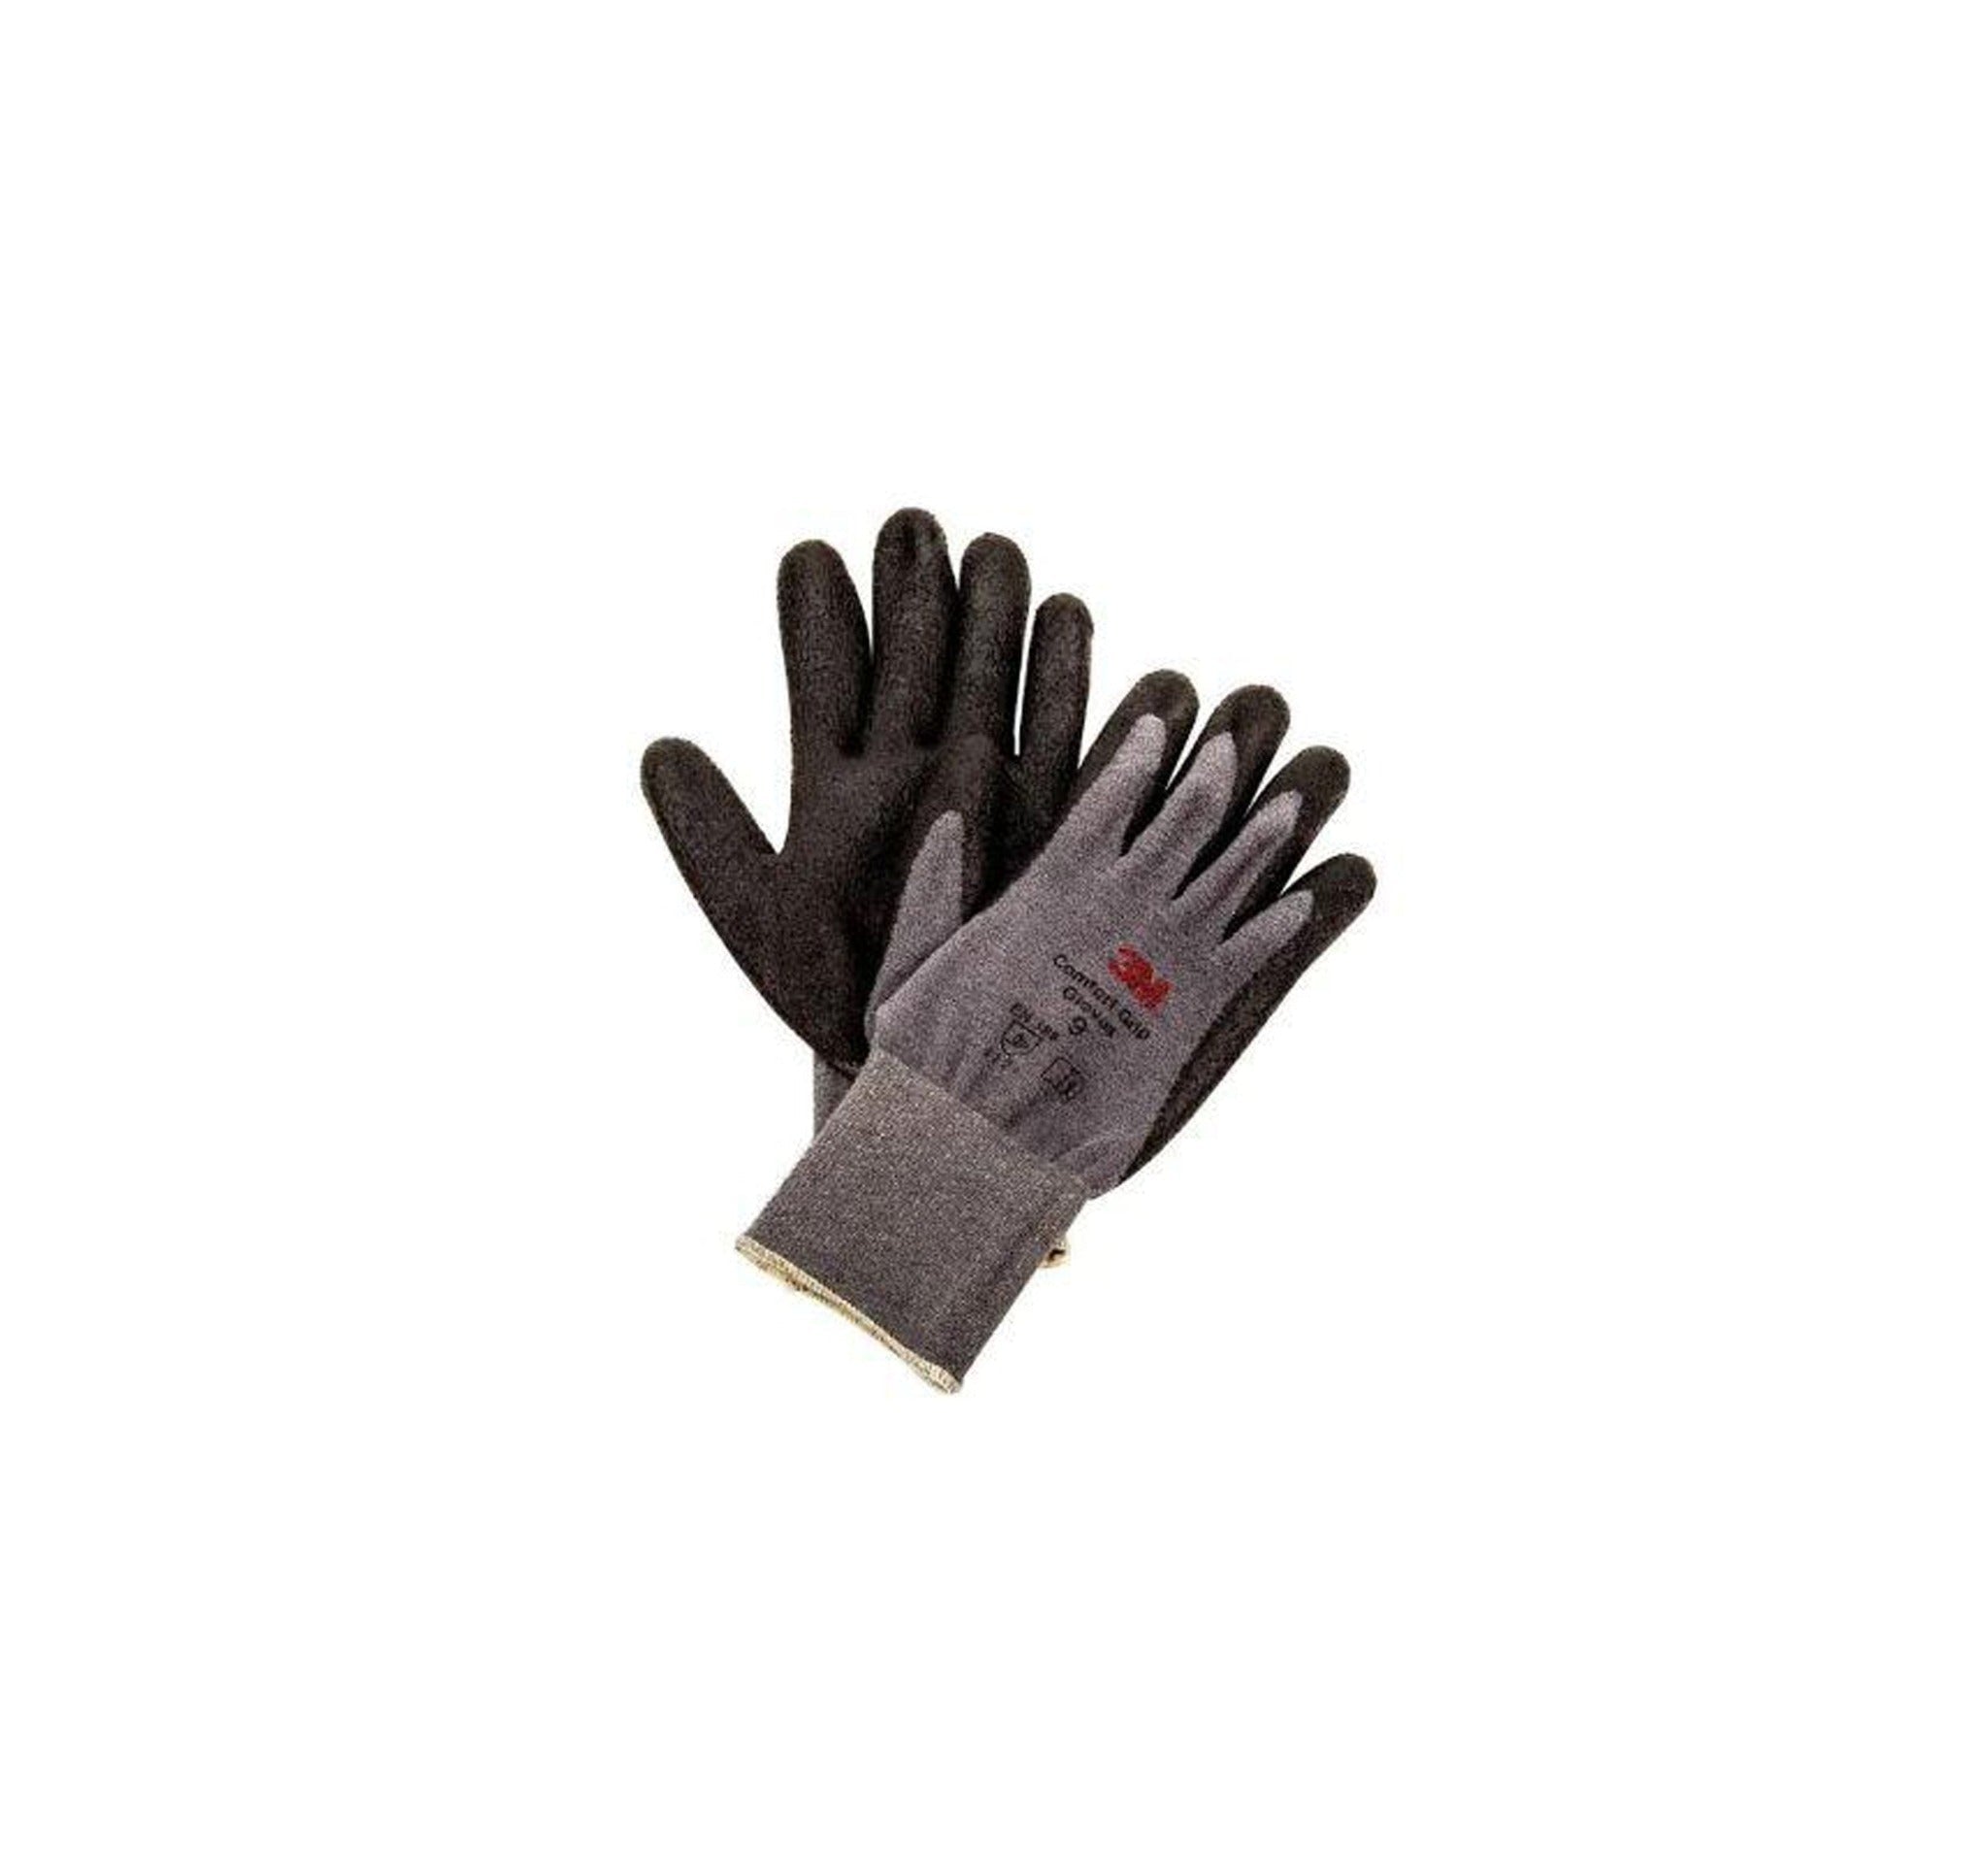 3M Comfort Grip Glove CGM W, Winter